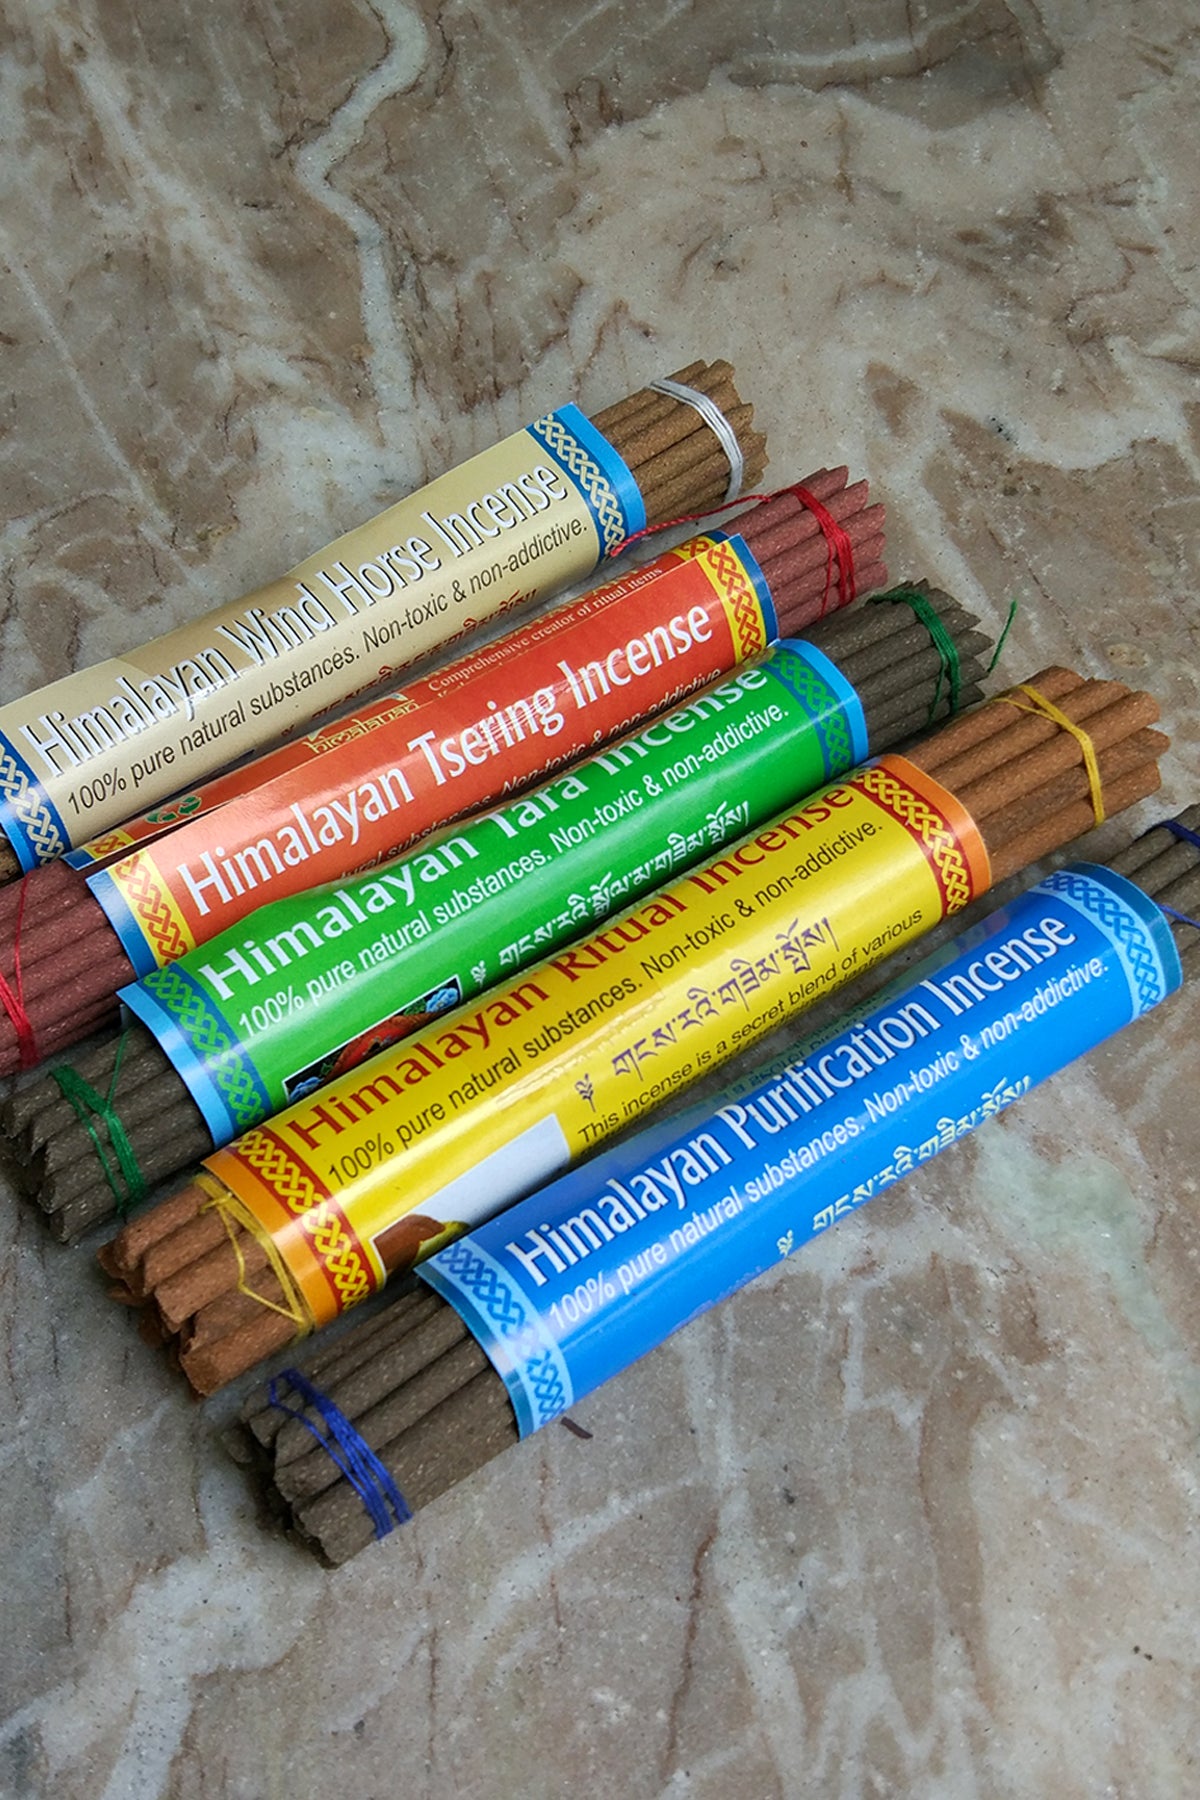 Set of 5 Mix Himalayan Incense Gift Set Handmade Incense Sticks, large